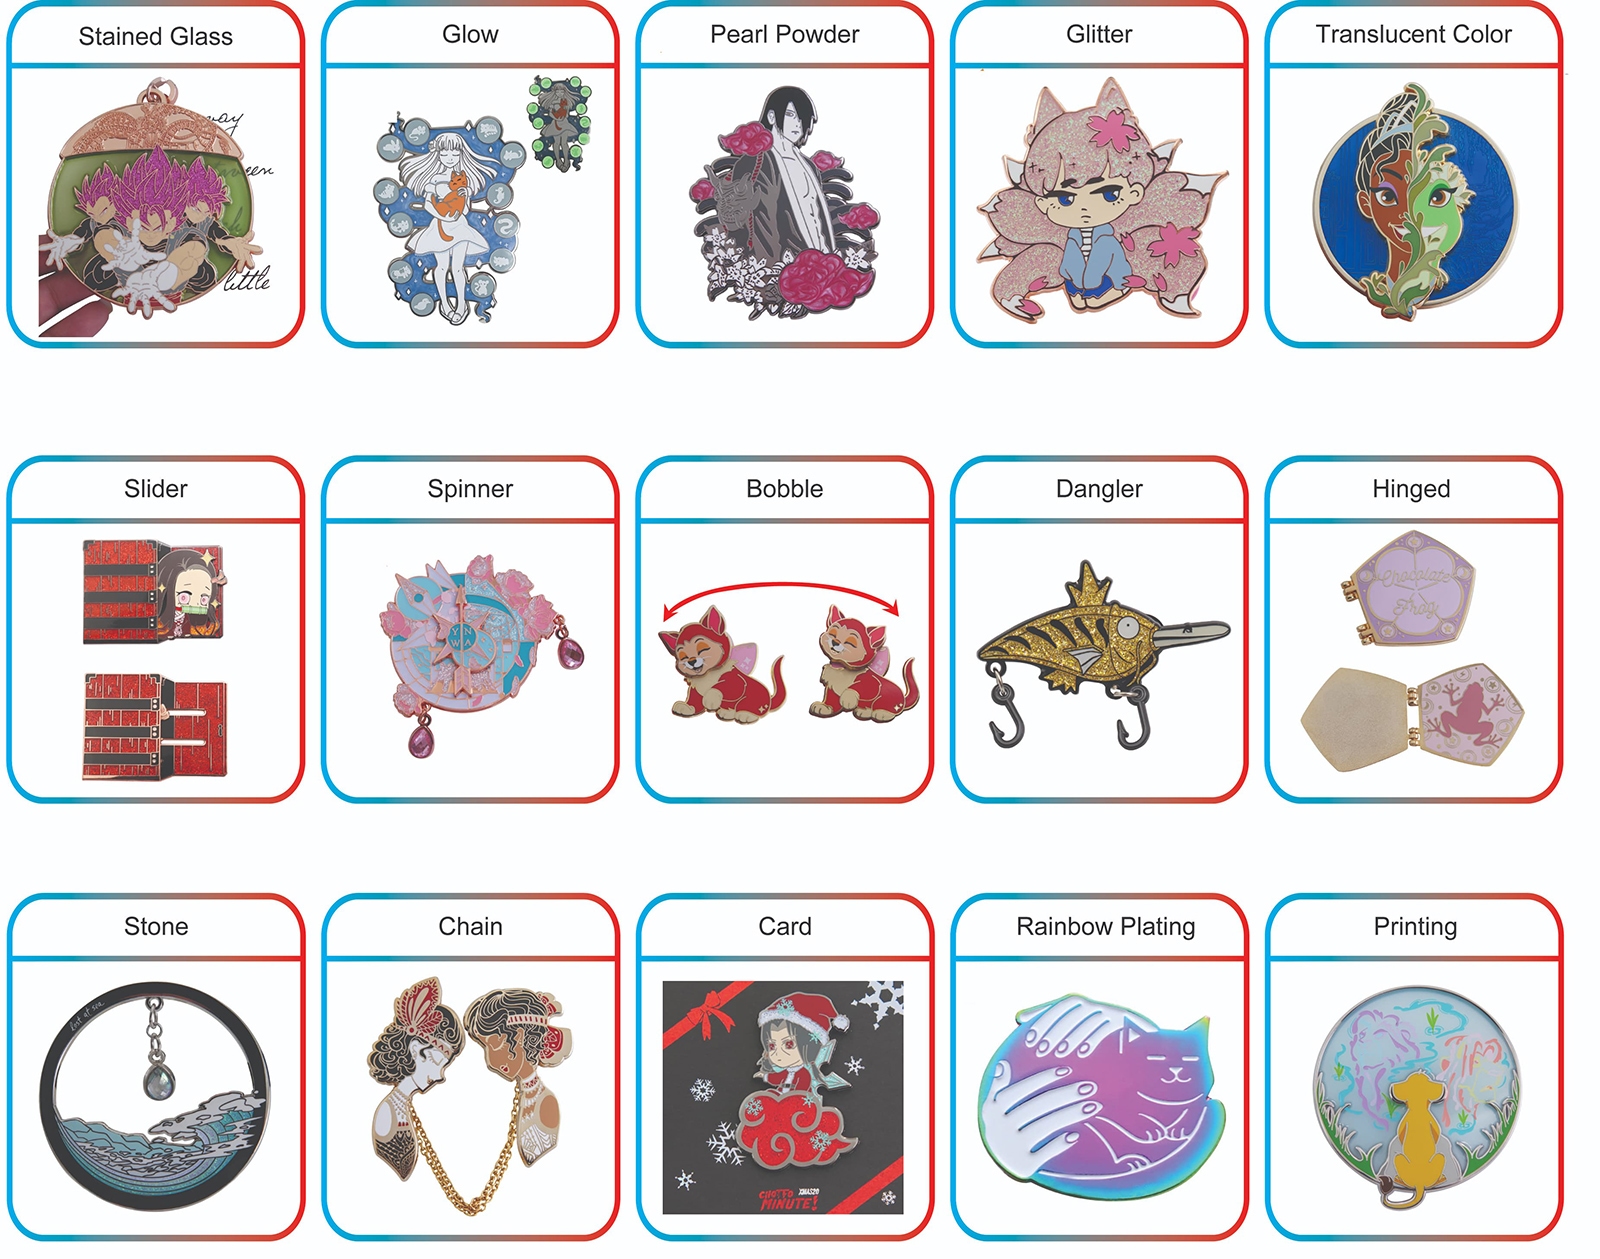 Disney Designer Collection Ultimate Princess Celebration Ariel Pin Now Available on shopDisney